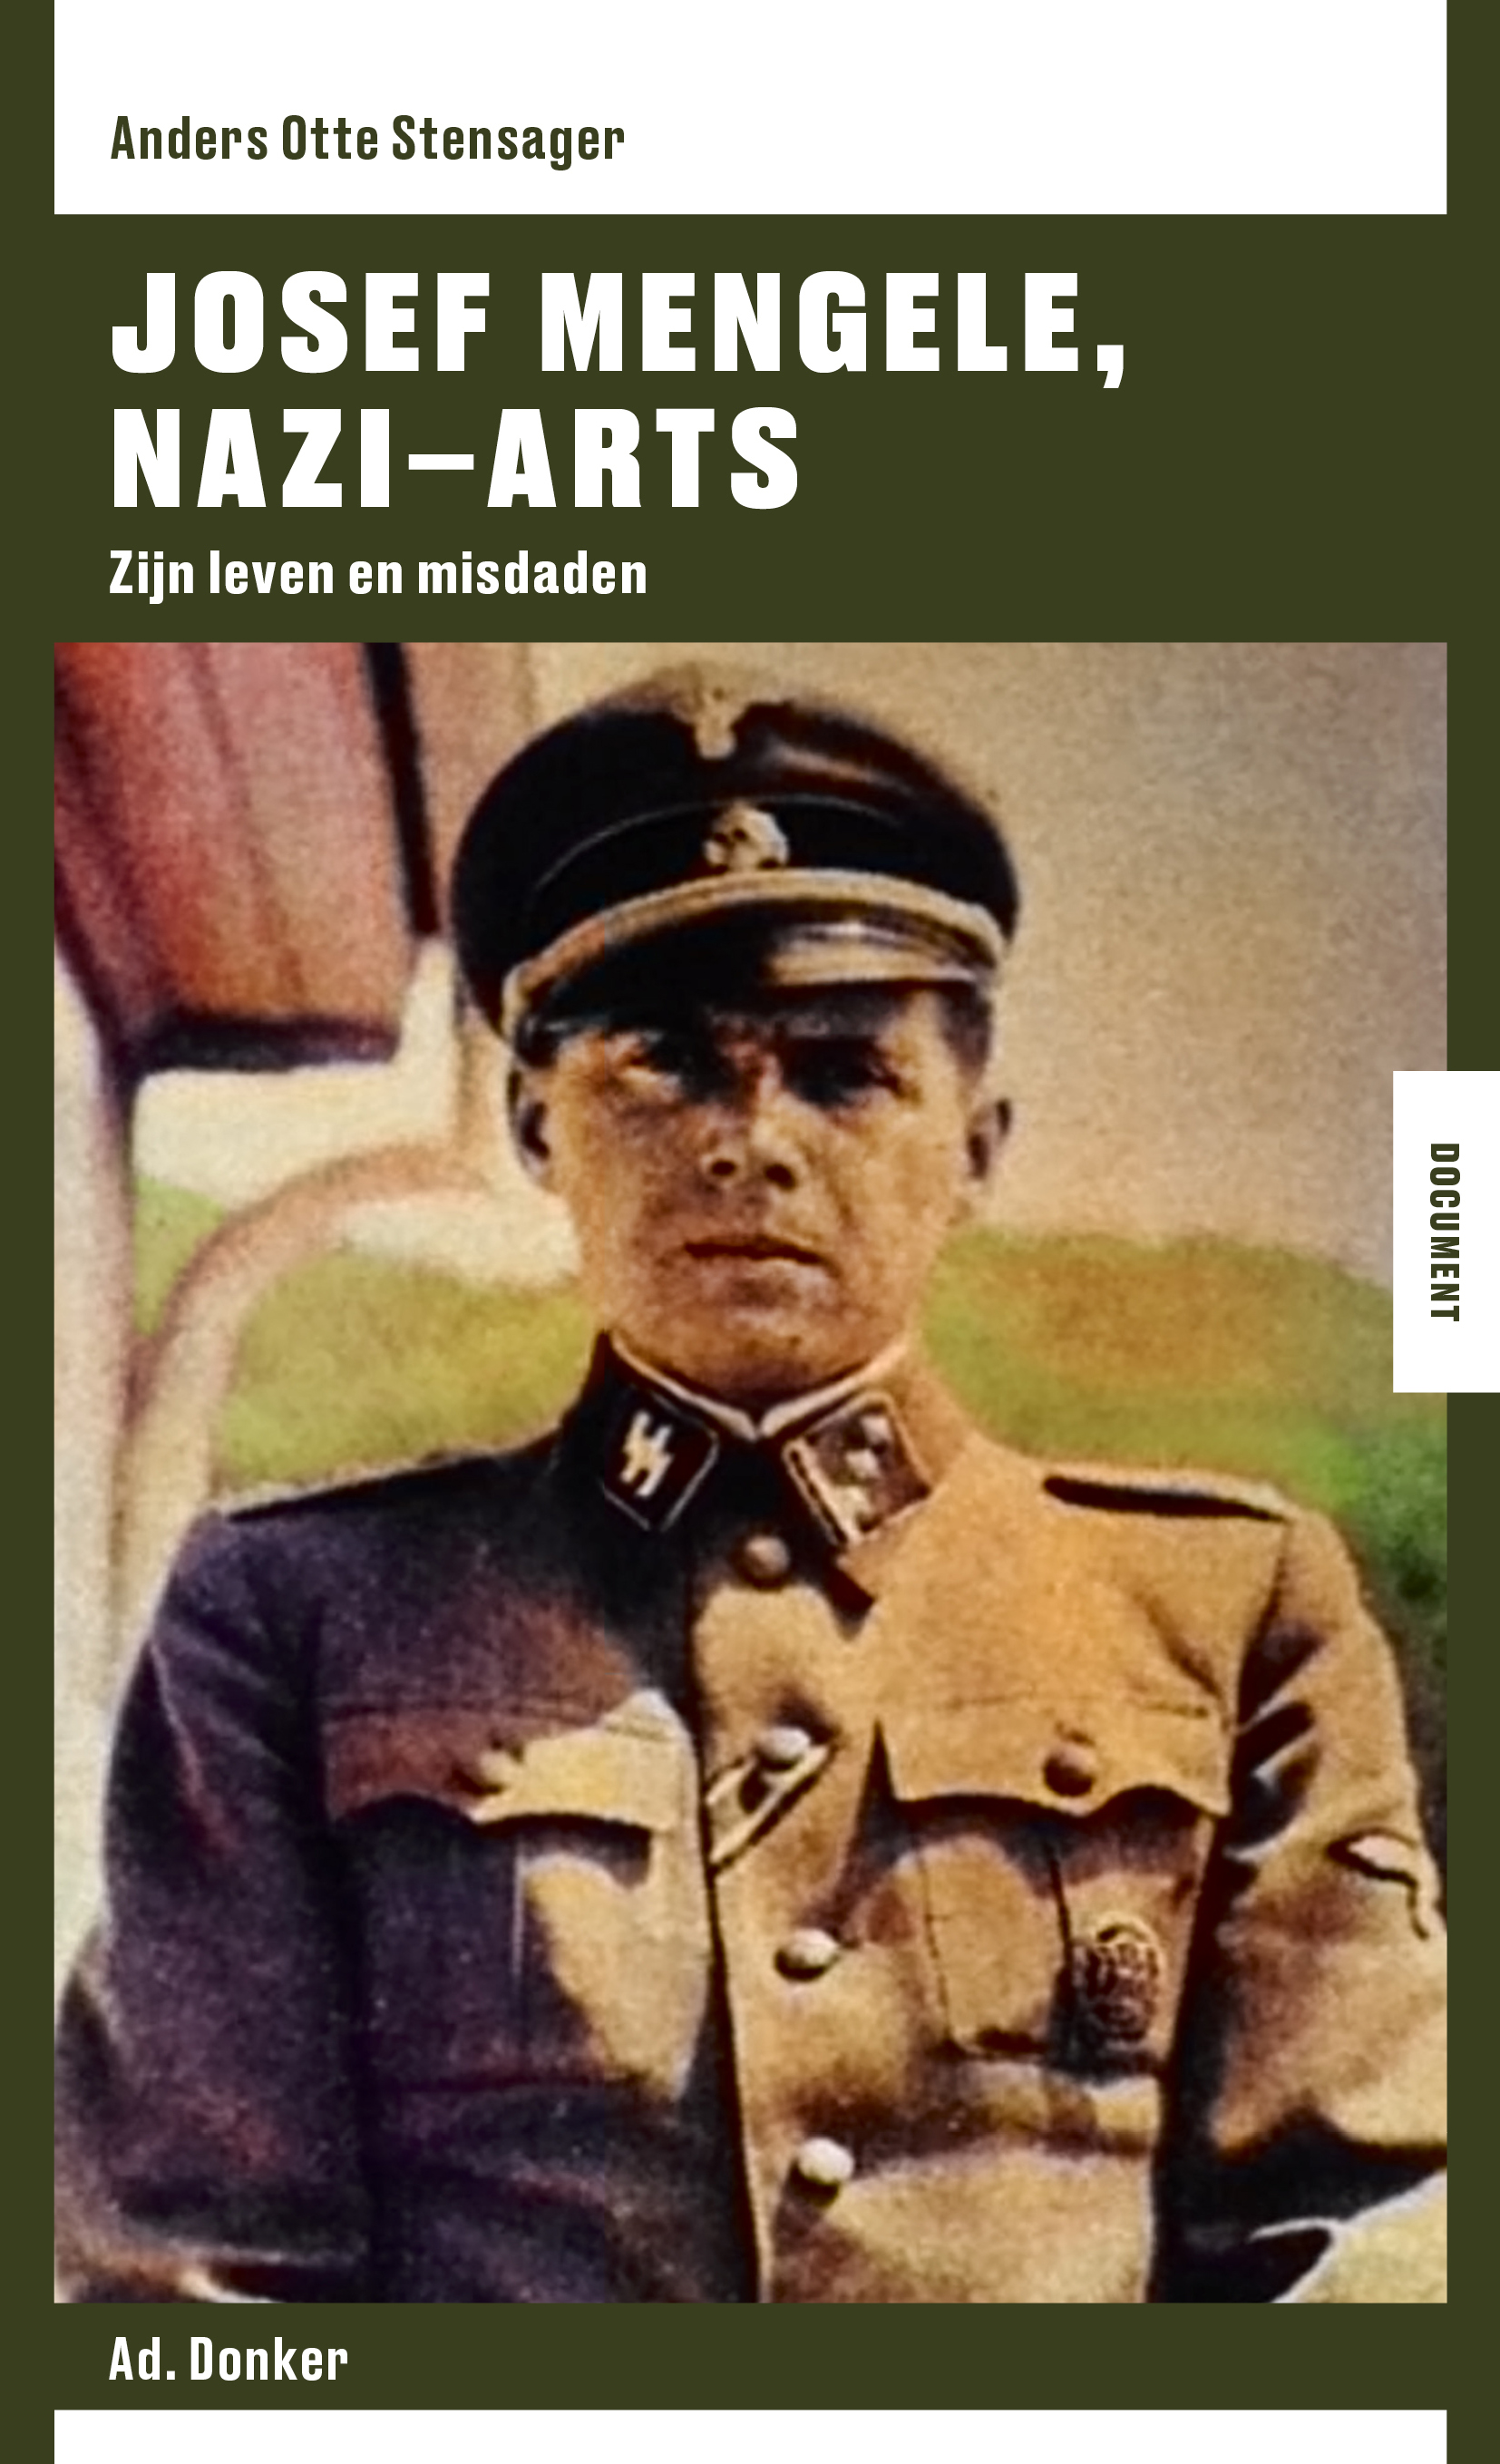 Josef Mengele, Nazi - Arts